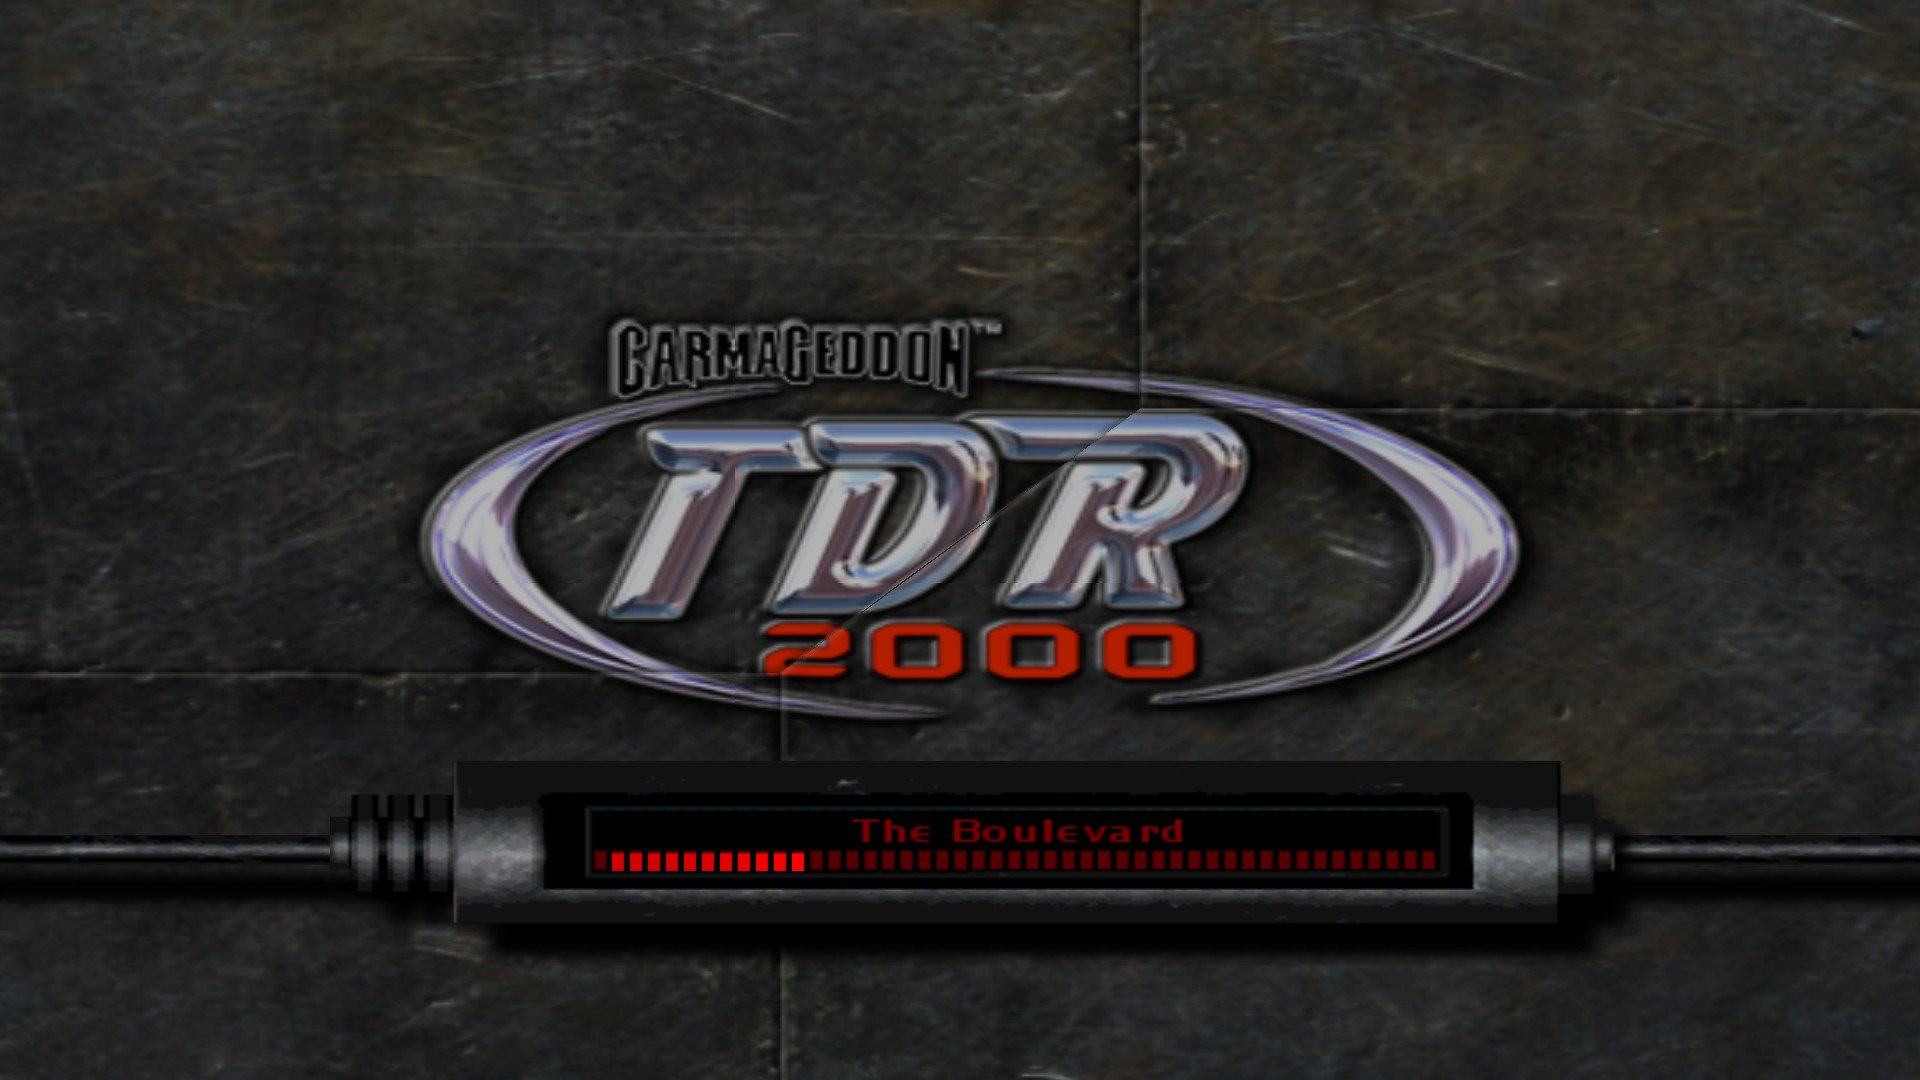 Carmageddon TDR 2000 Steam Gift 3.13 usd